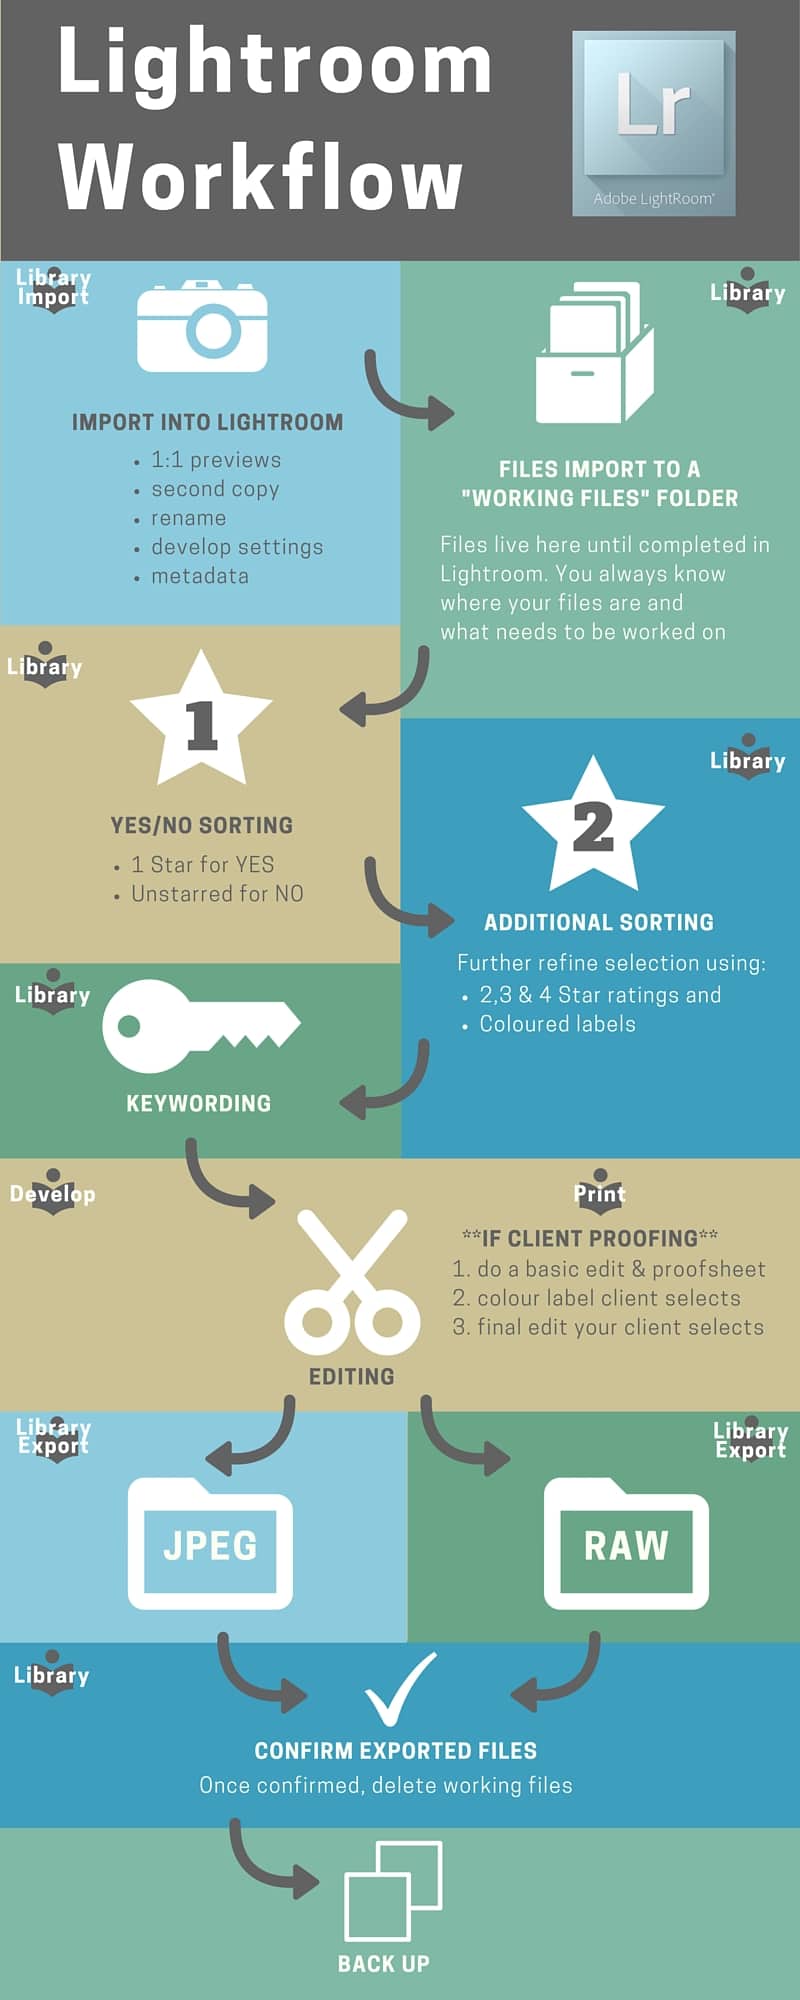 Lightroom workflow infographic